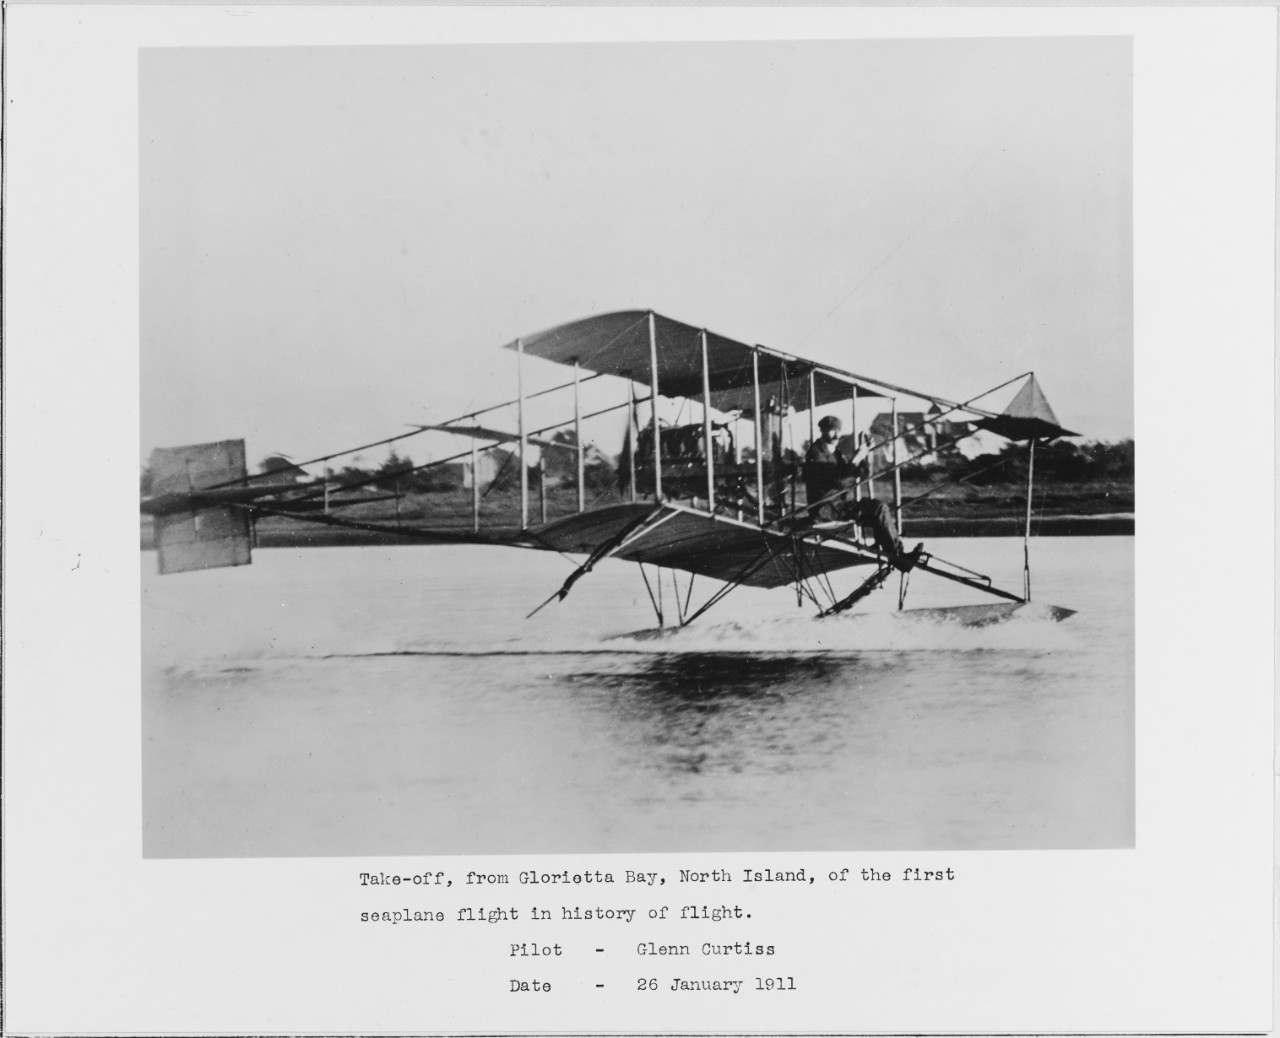 First seaplane flight